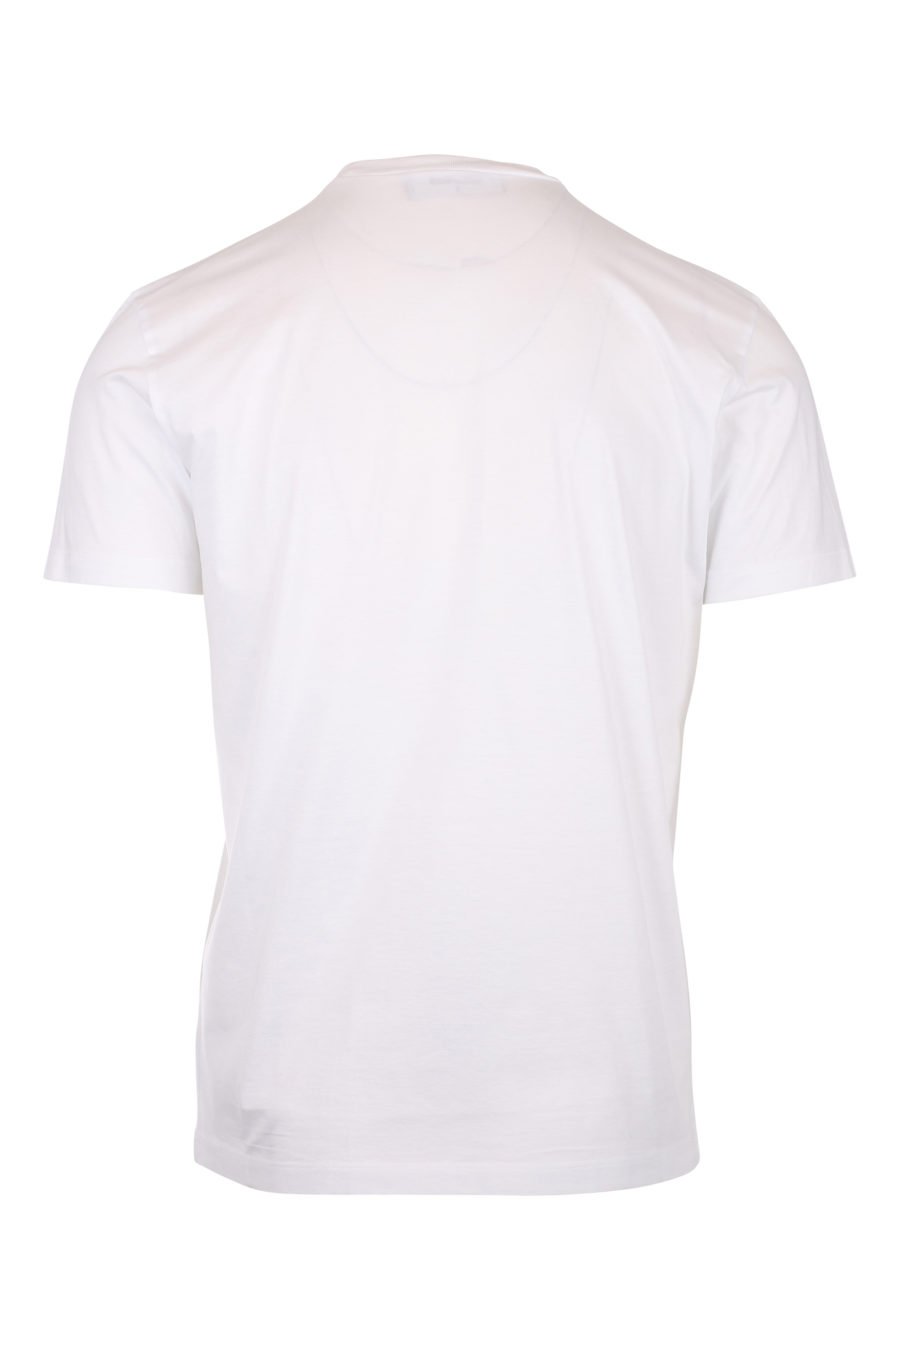 T-shirt white with logo ceresio 9 - IMG 9778